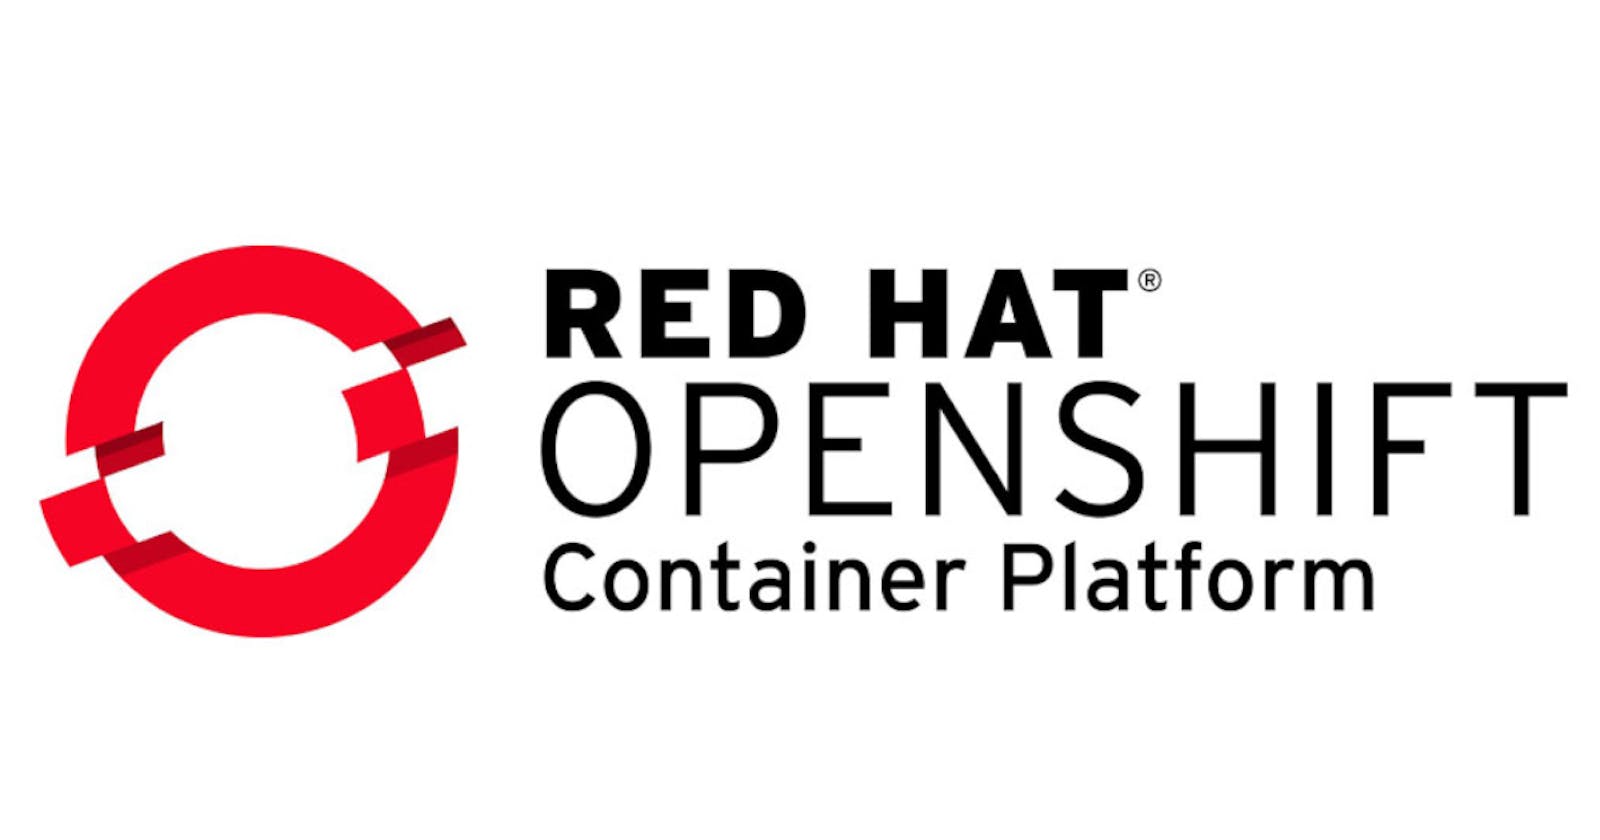 Openshift Container Platform